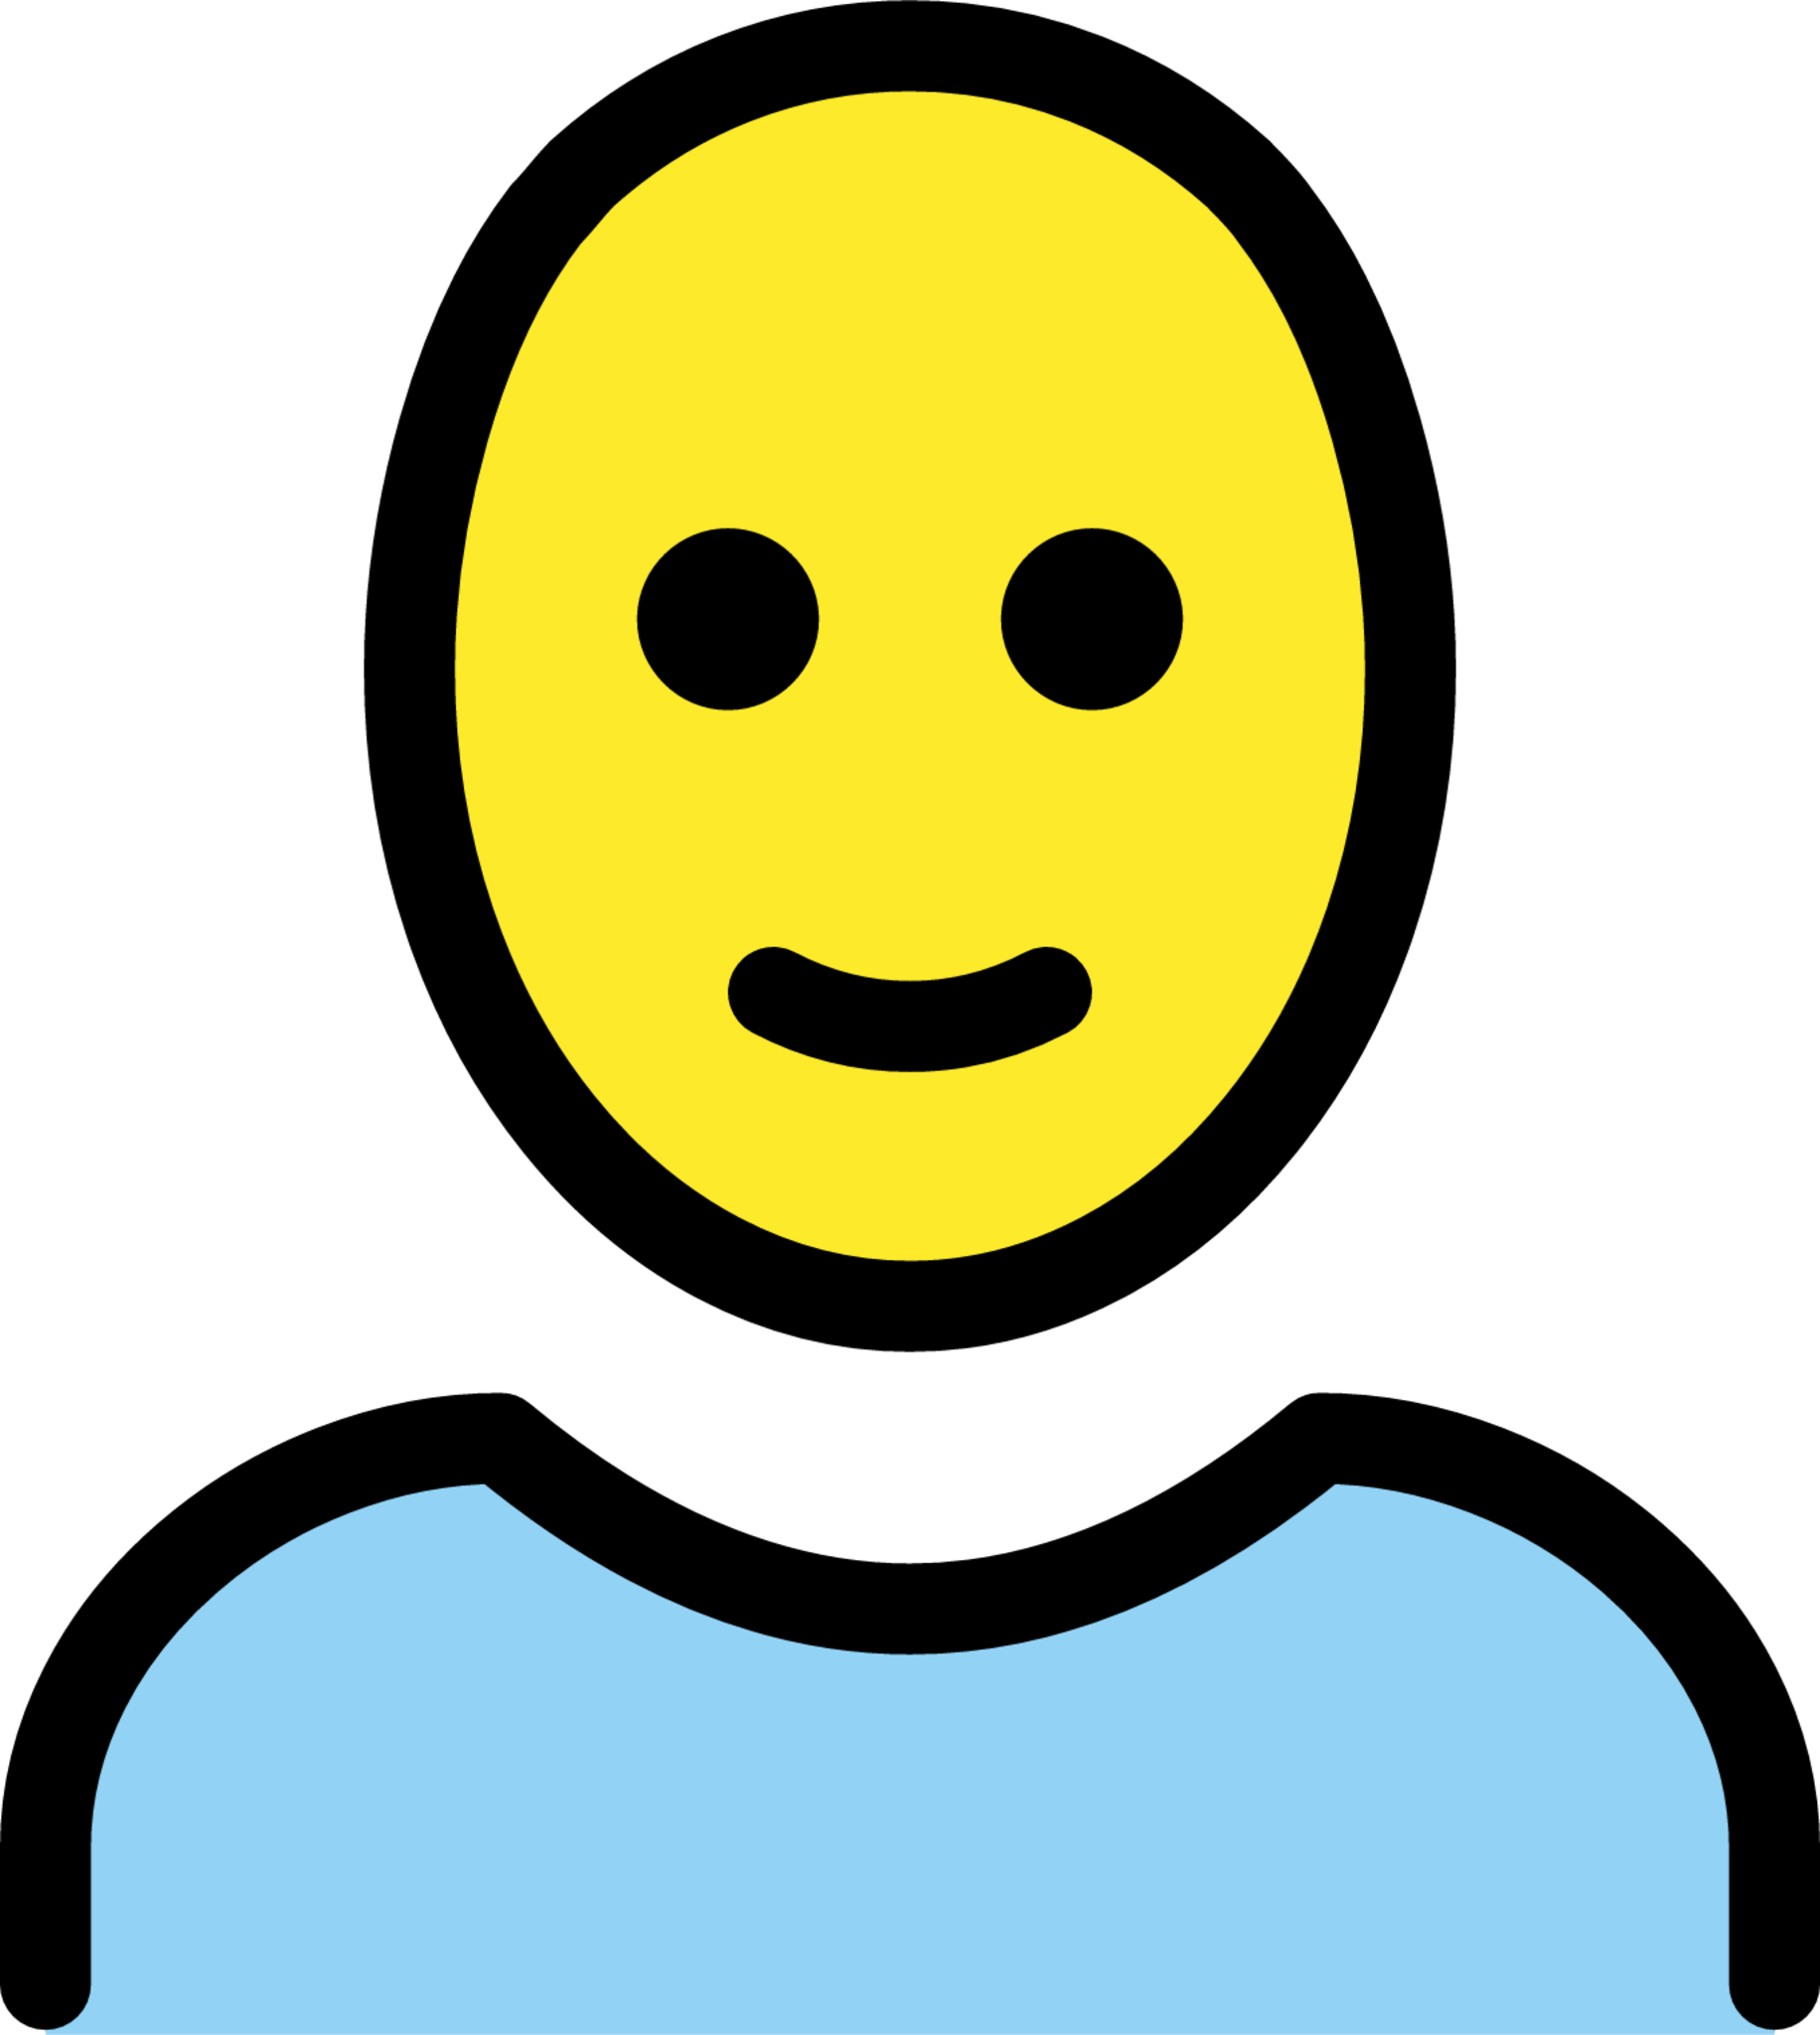 person: bald emoji